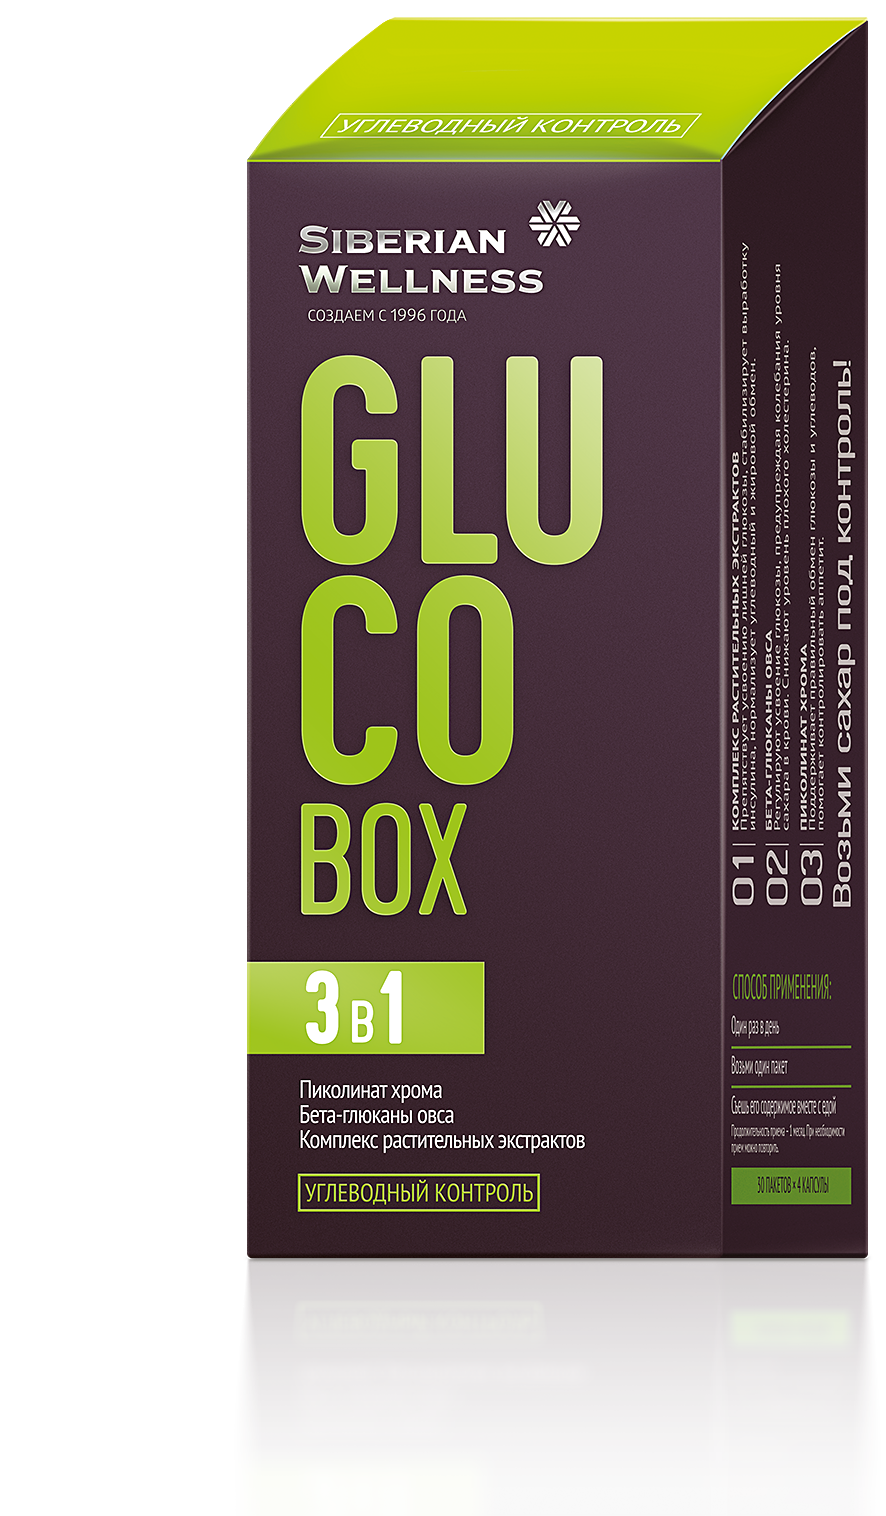 Gluco Box / контроль уровня сахара - набор Daily Box. Gluco Box / контроль уровня сахара. Gluco Box Сибирское. Gluco Box / контроль уровня. Gluco box капсулы таблетки инструкция